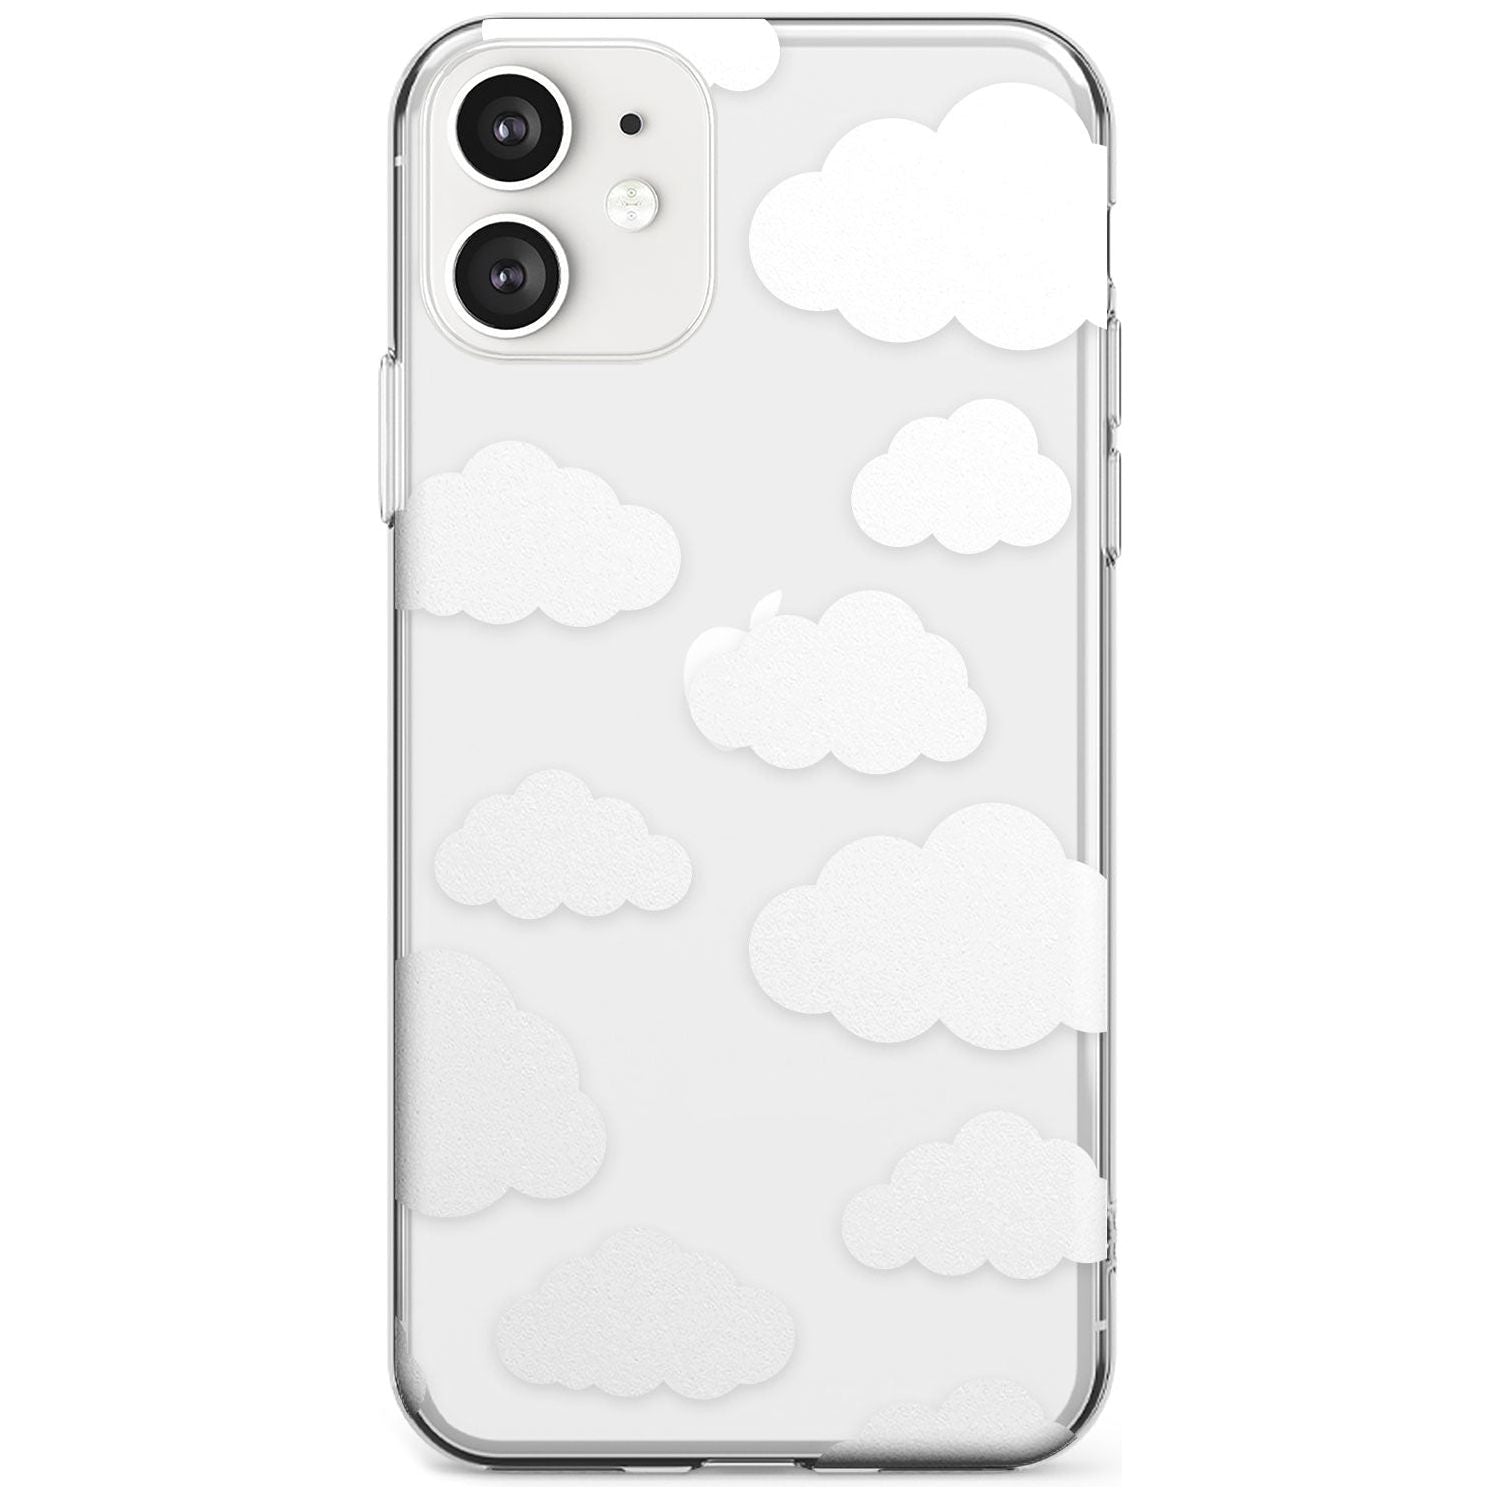 Transparent Cloud Pattern Black Impact Phone Case for iPhone 11